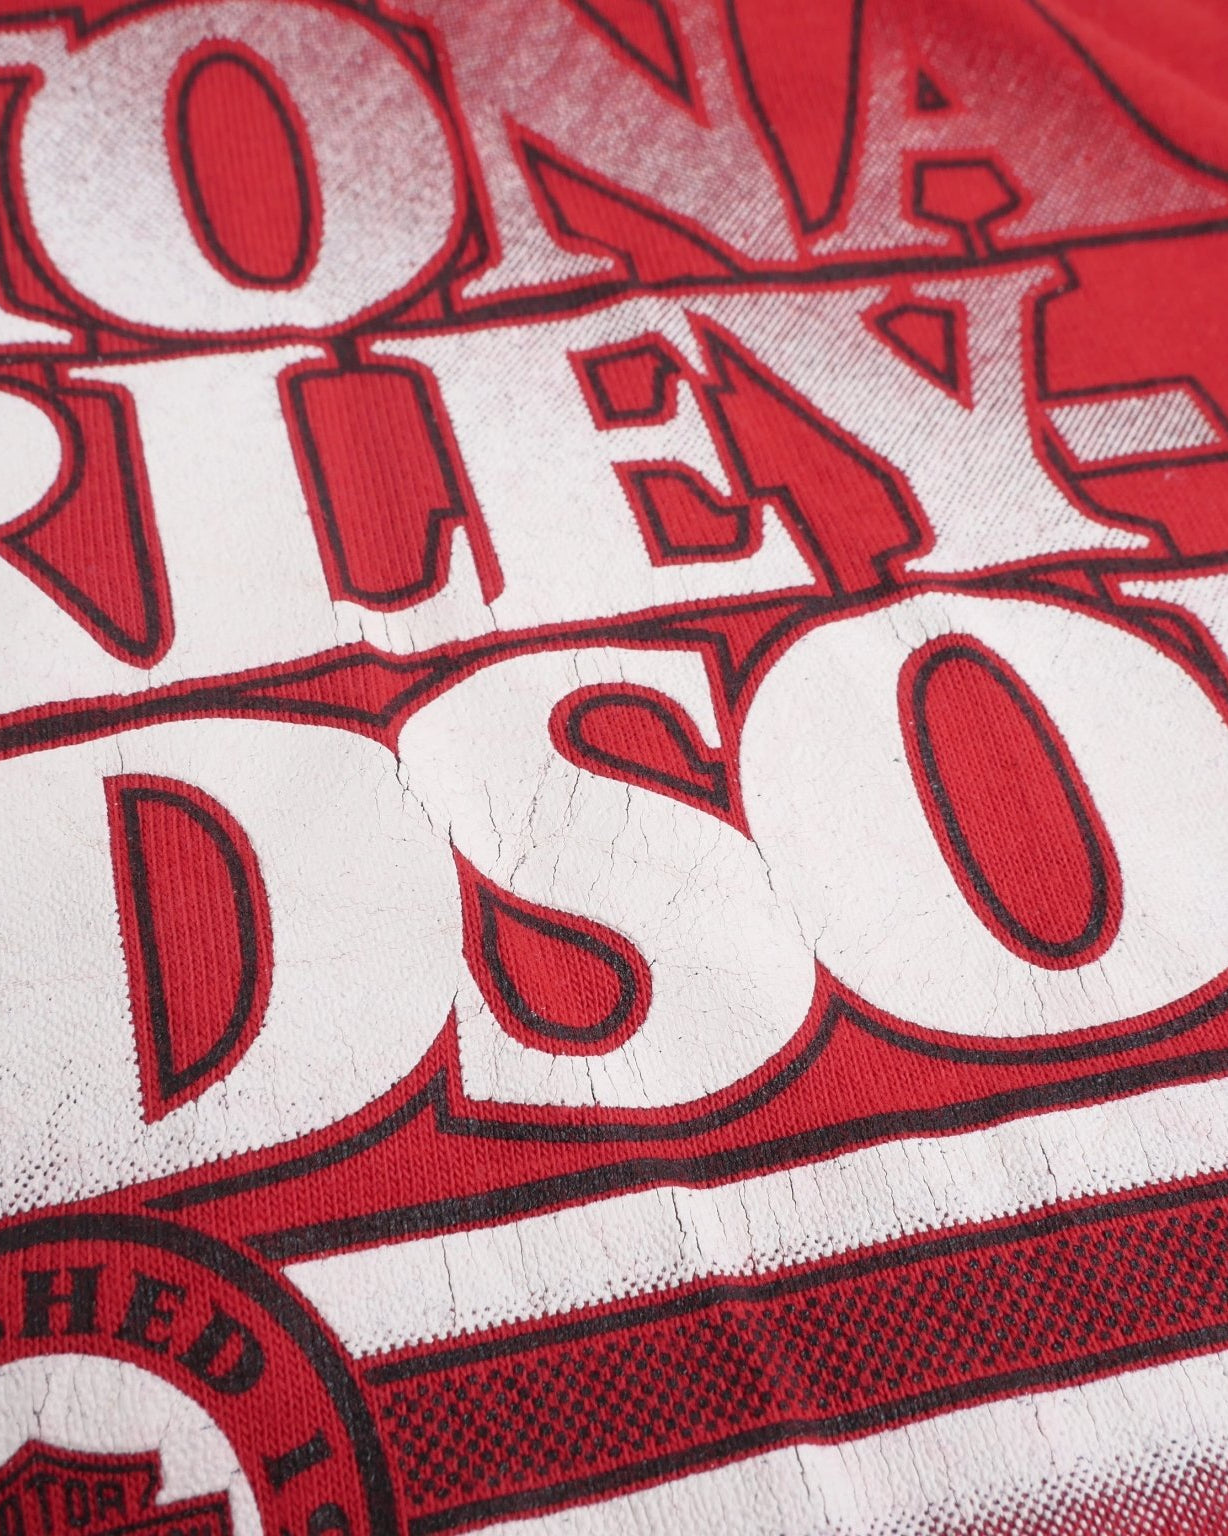 Harley Davidson printed Florida red Polo Shirt - Peeces